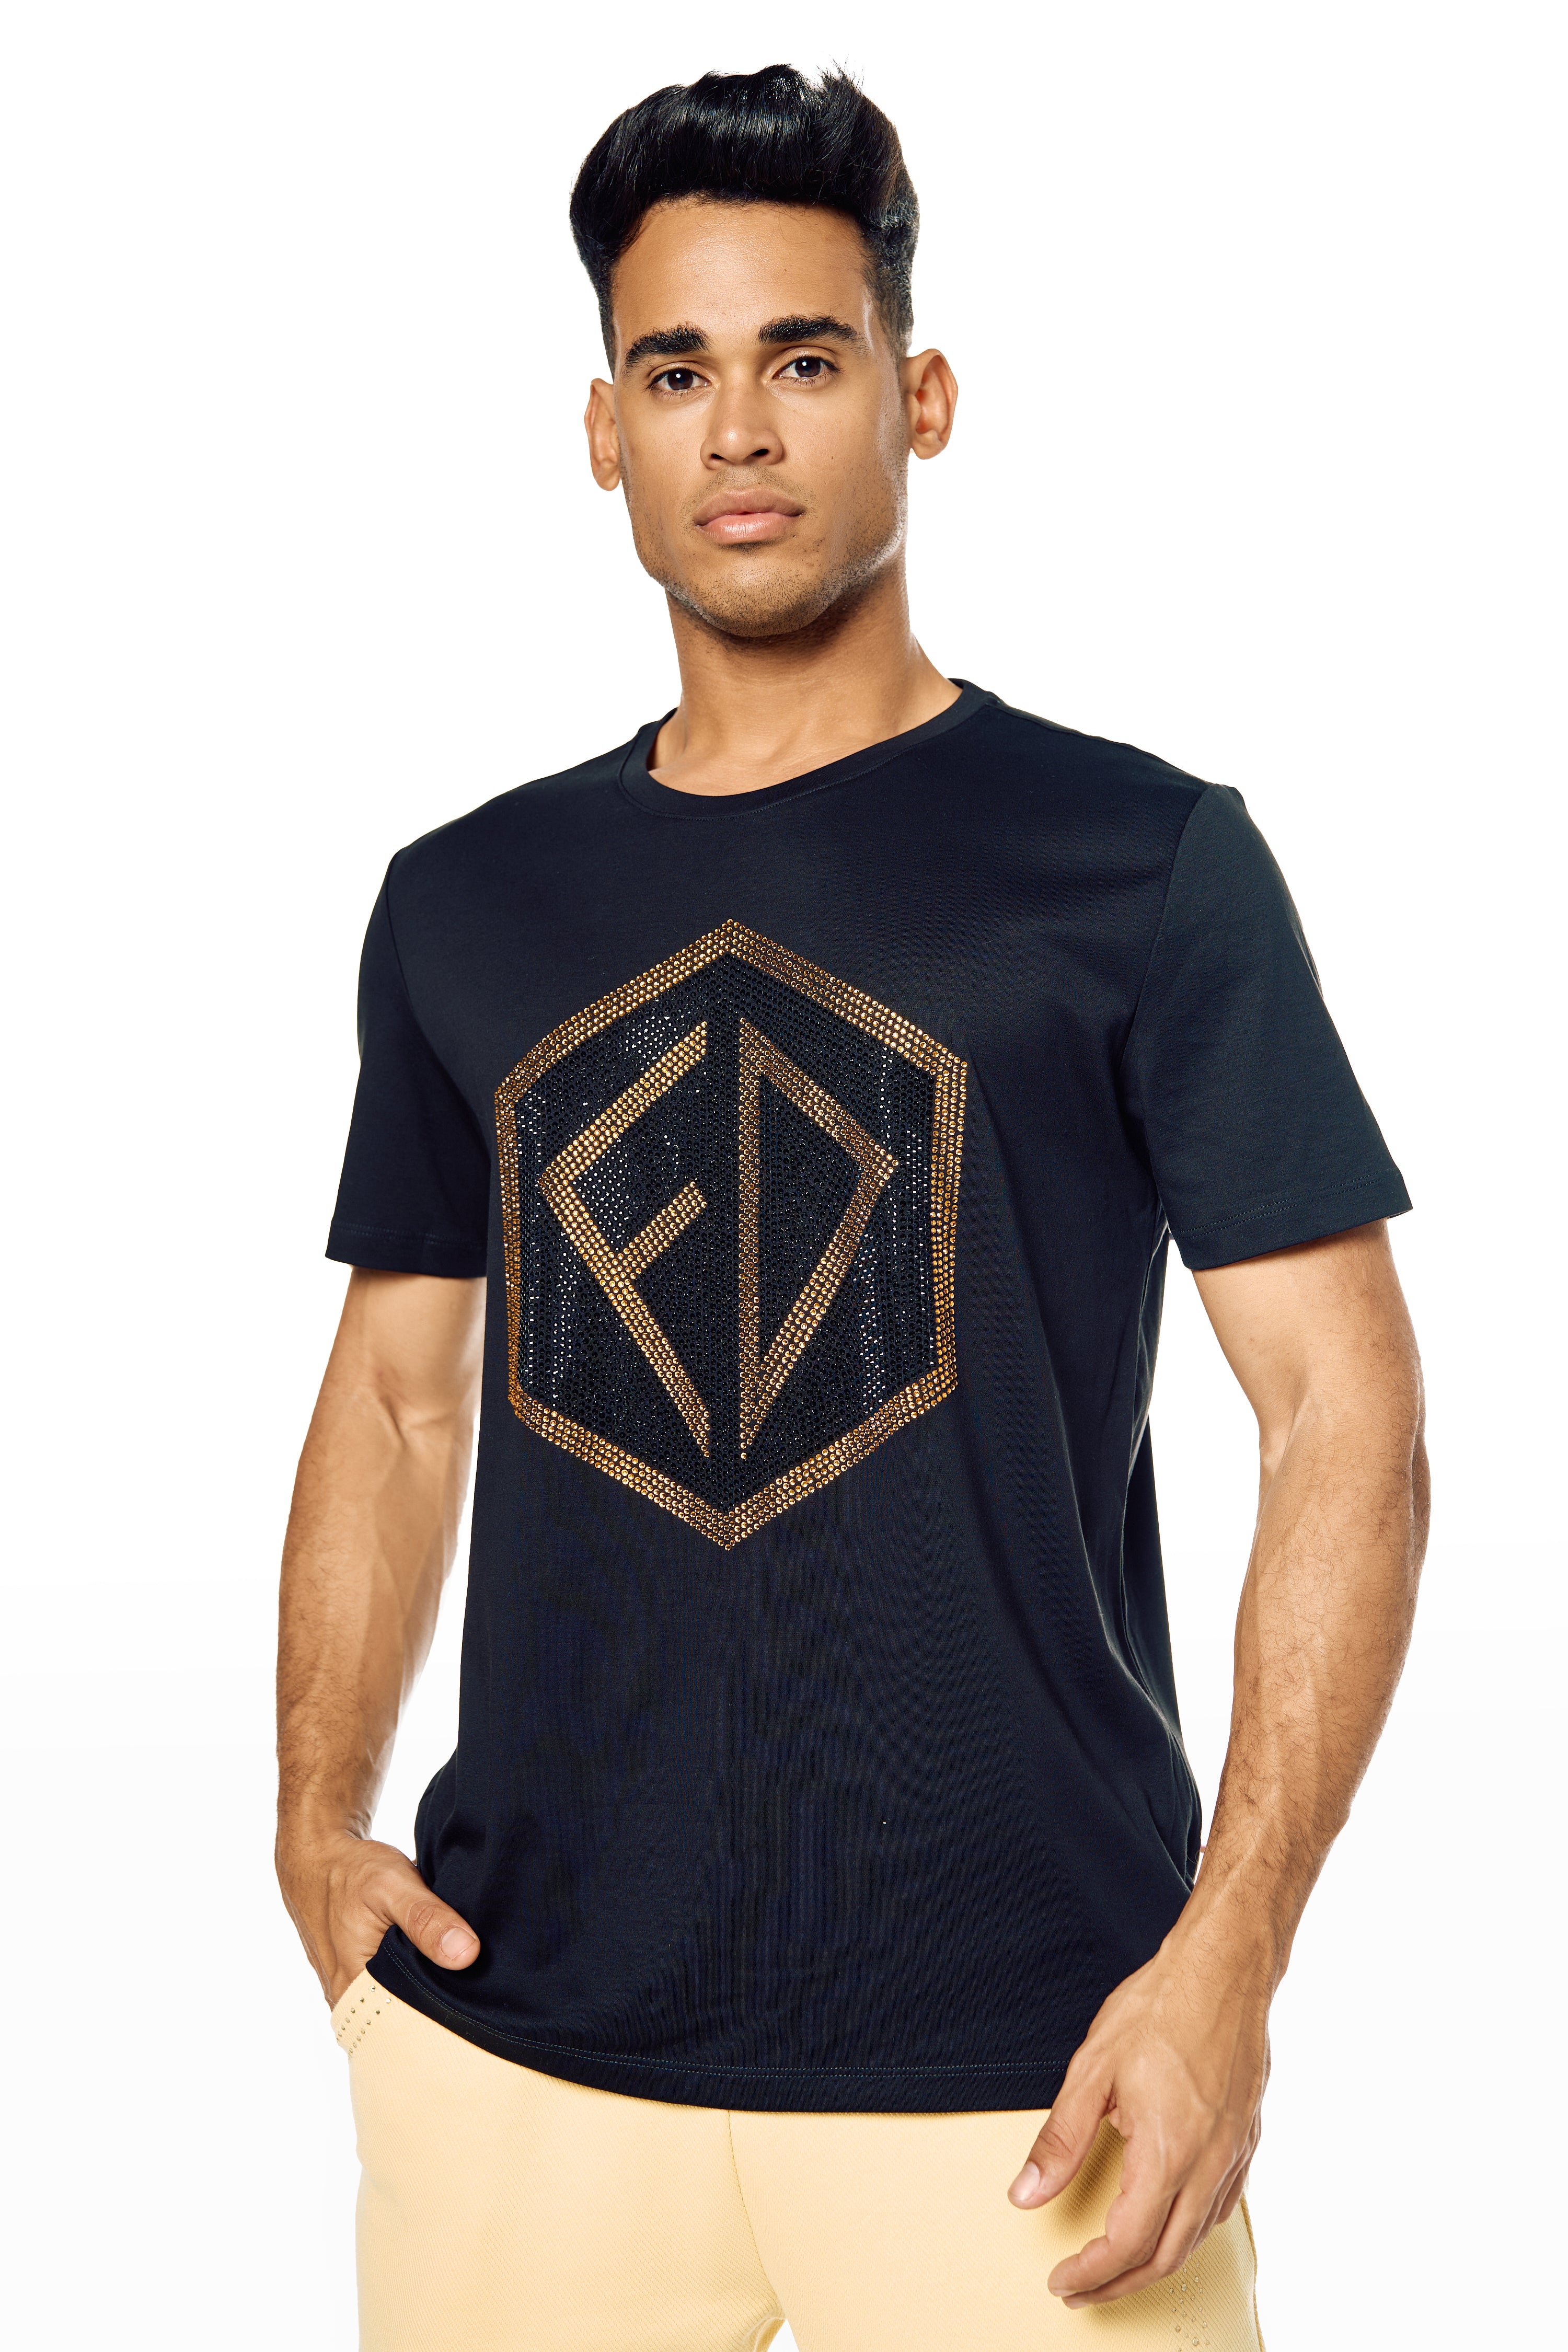 FRAUD crystal logo T-shirt